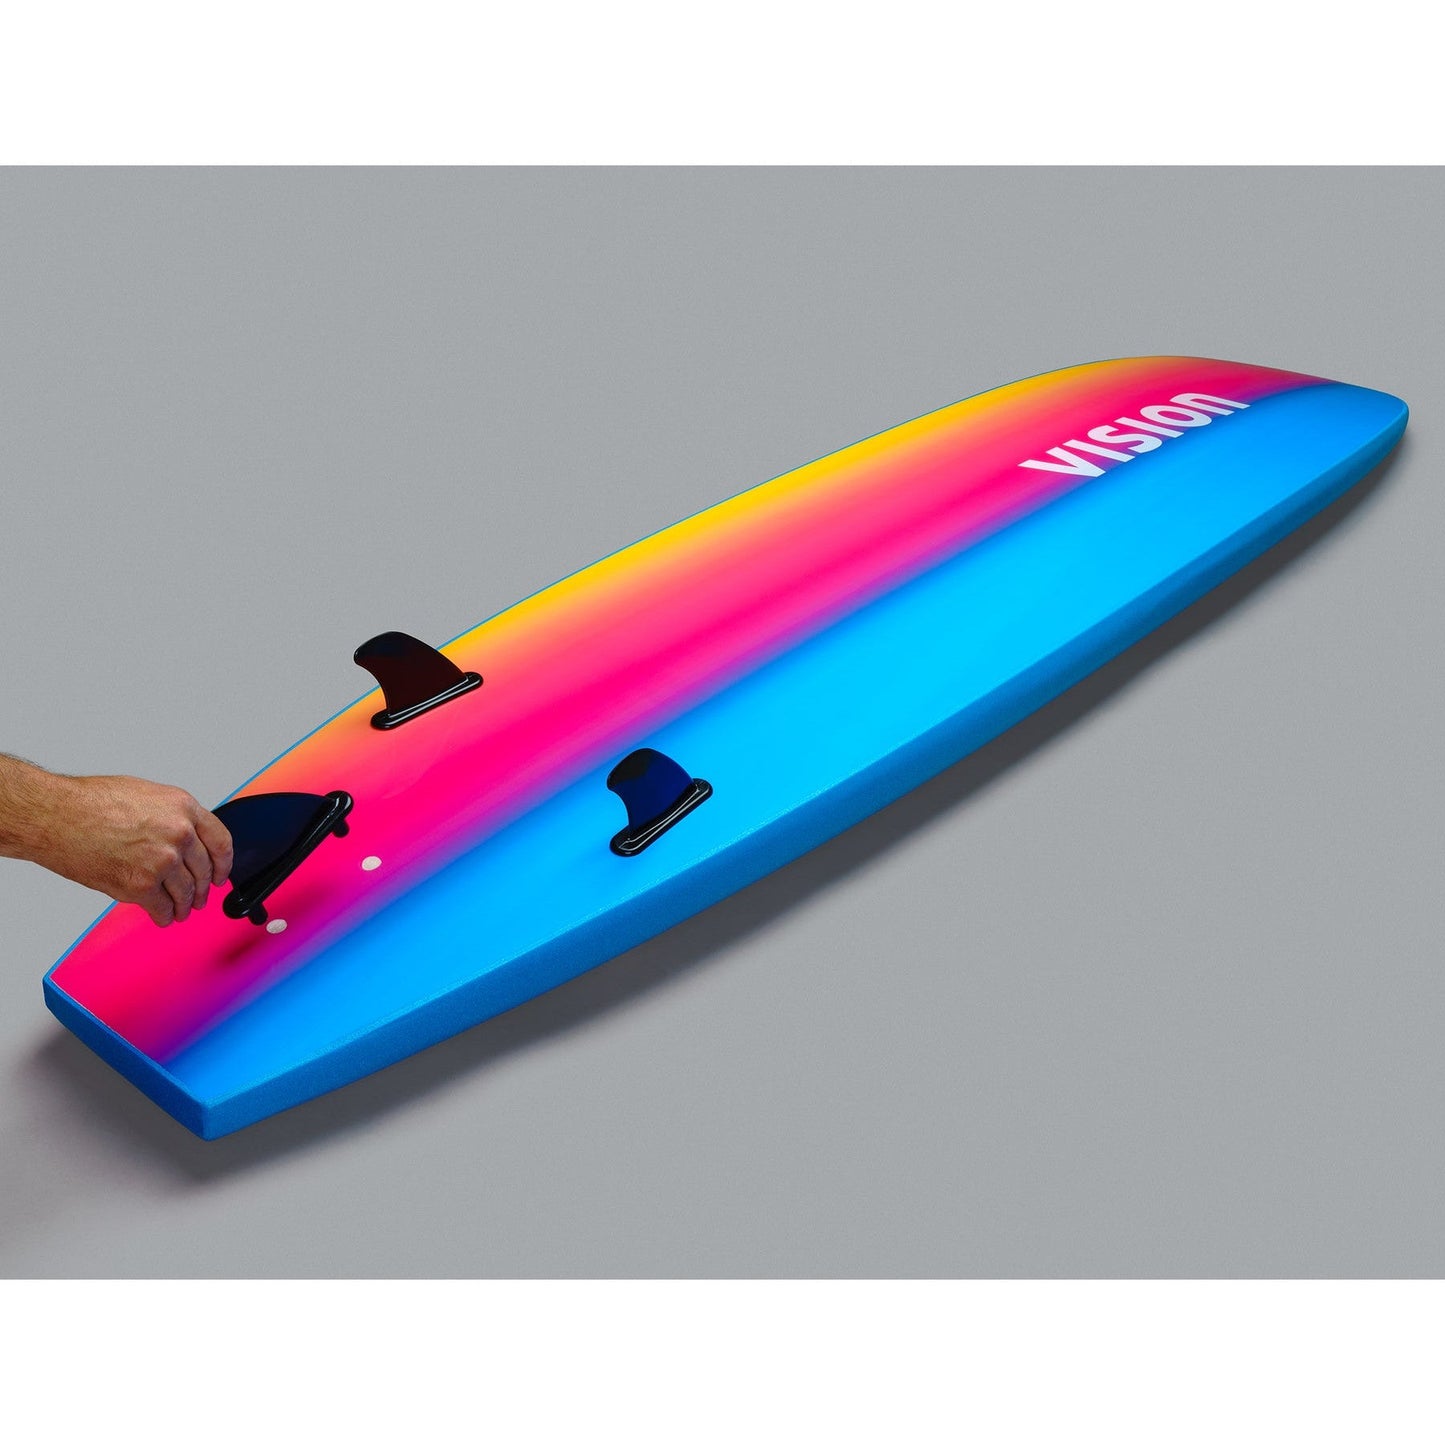 vision-ignite-surfboard-softboard-learner-beginner-fins-leash-psychedelic-swirl-side-hand